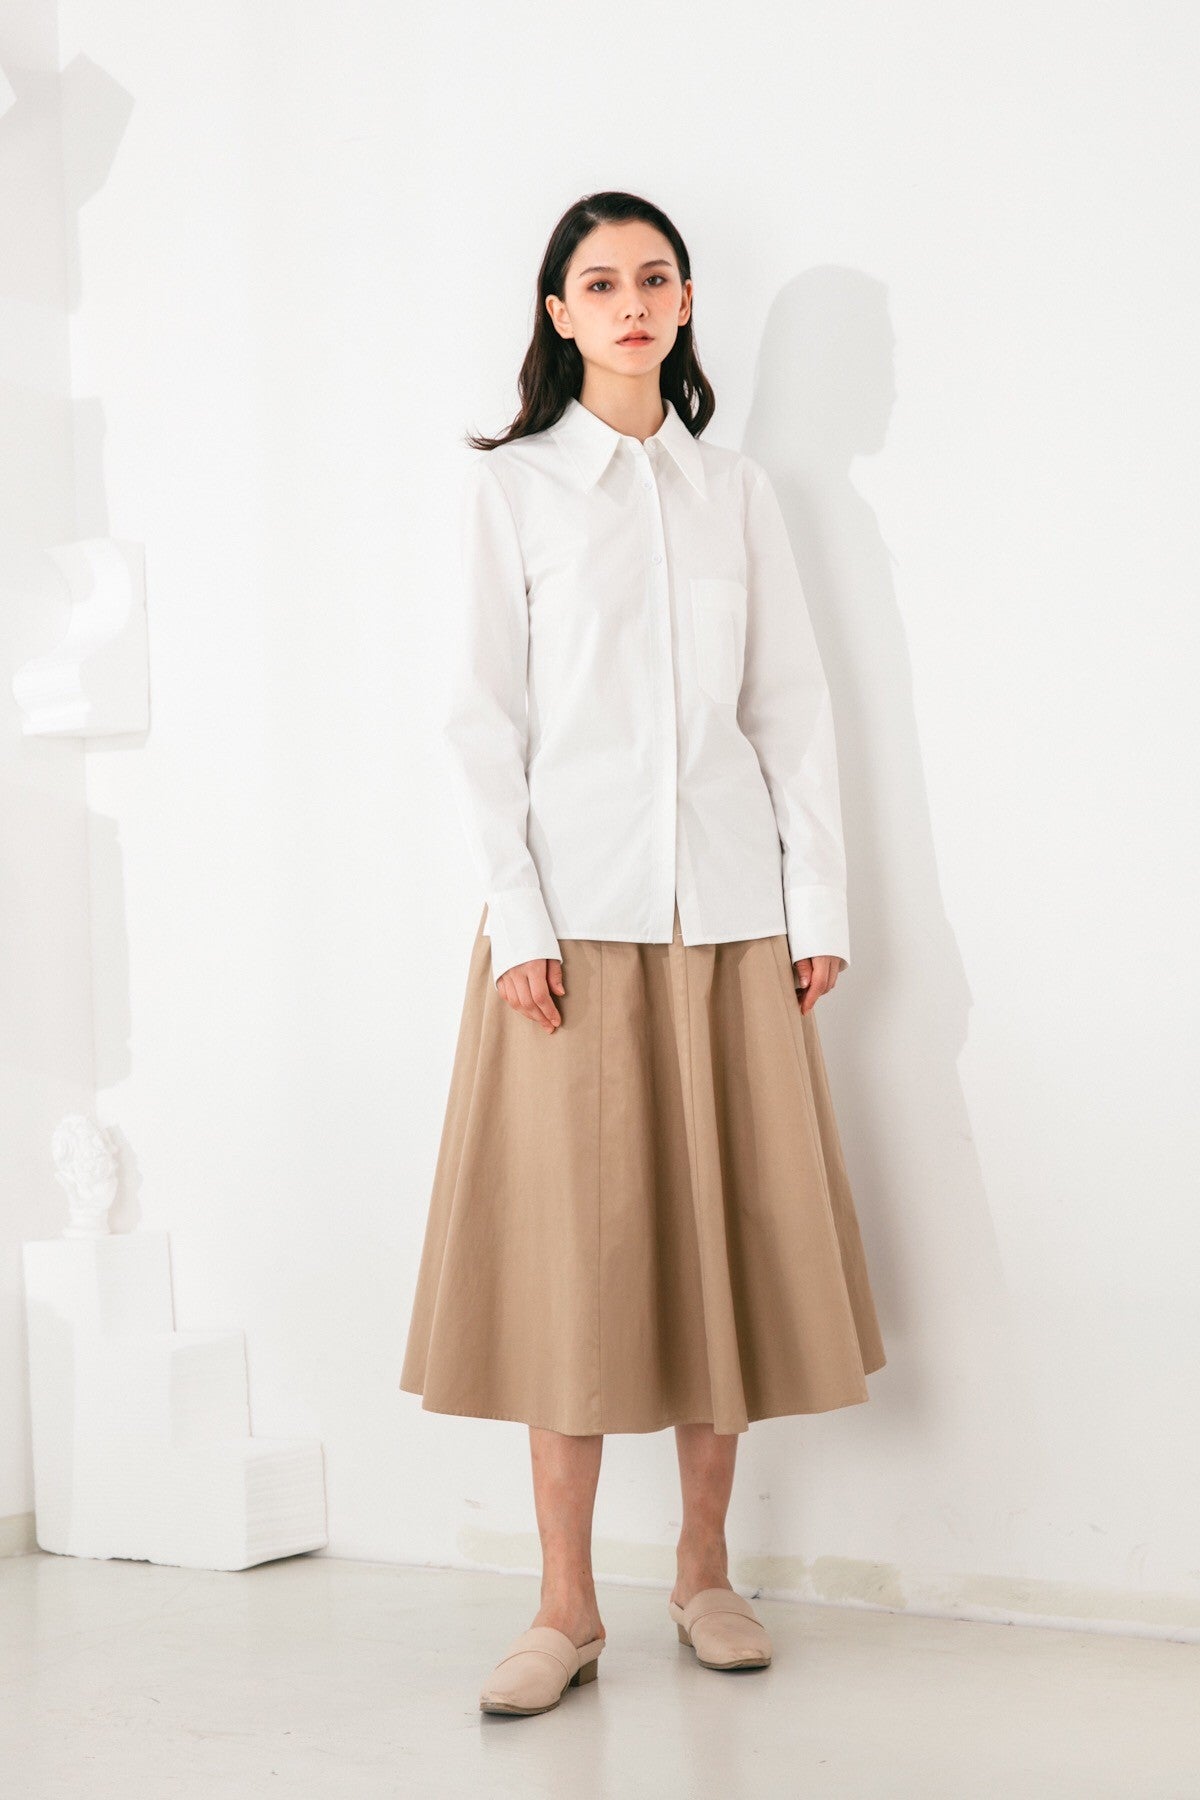 SKYE San Francisco SF shop ethical modern minimalist quality women clothing fashion Jeanne Midi Skirt